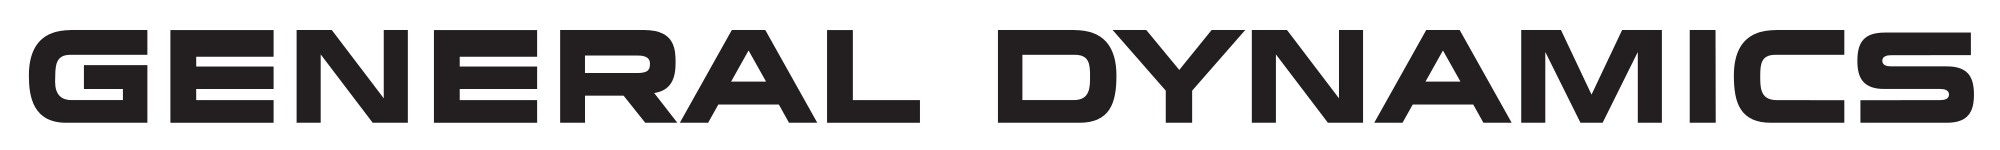 General-Dynamics-Logo.svg.png